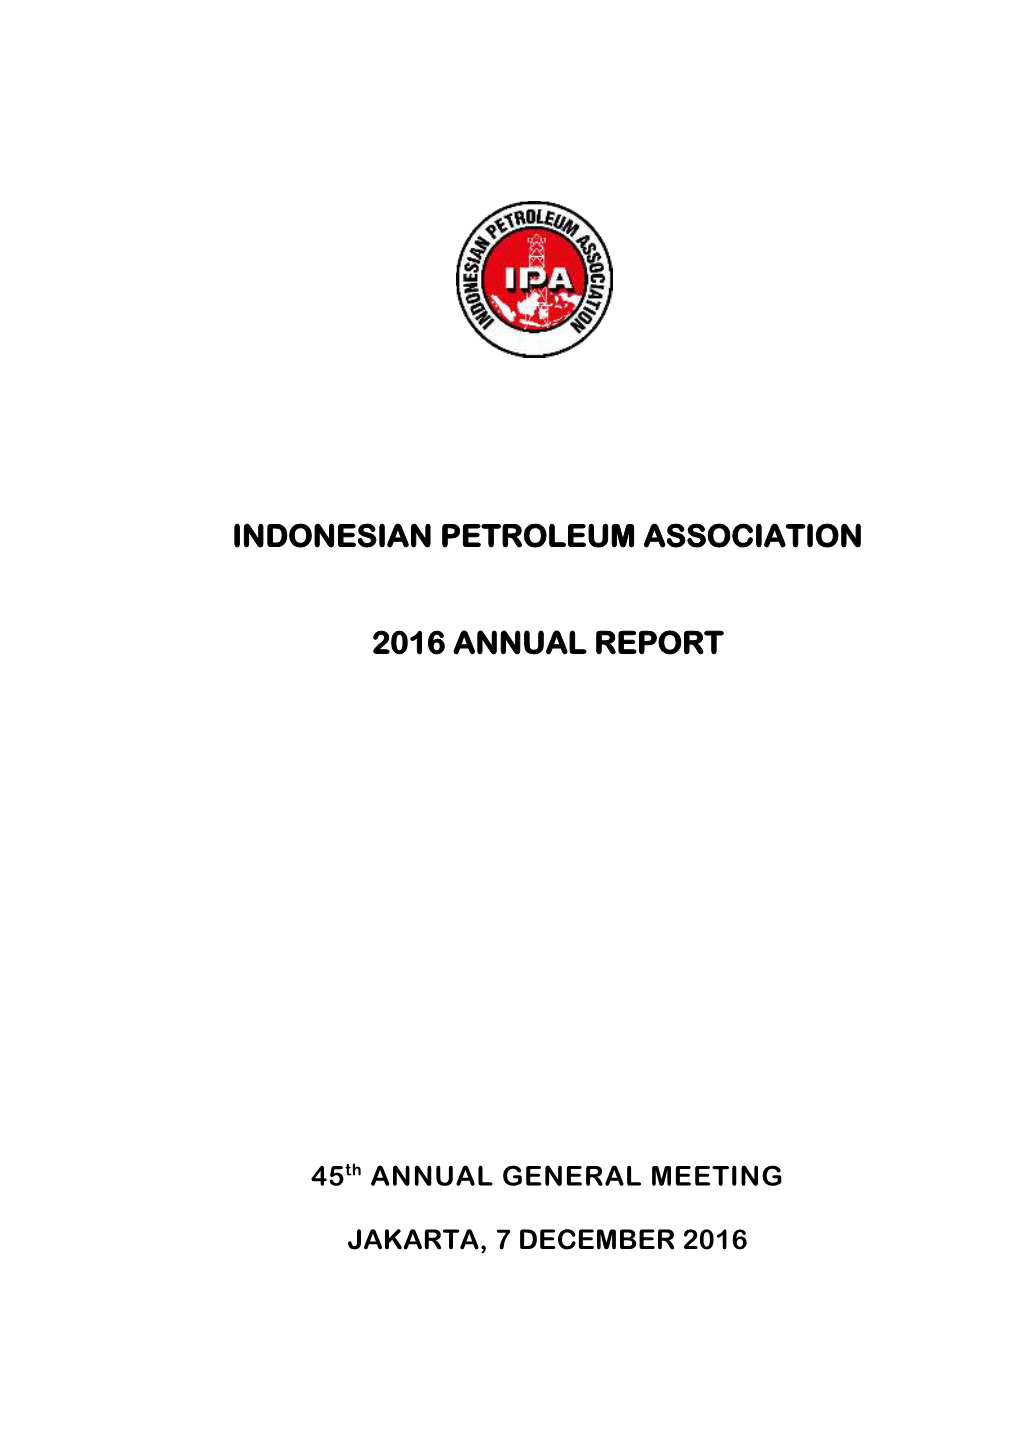 Indonesian Petroleum Association 2016 Annual Report